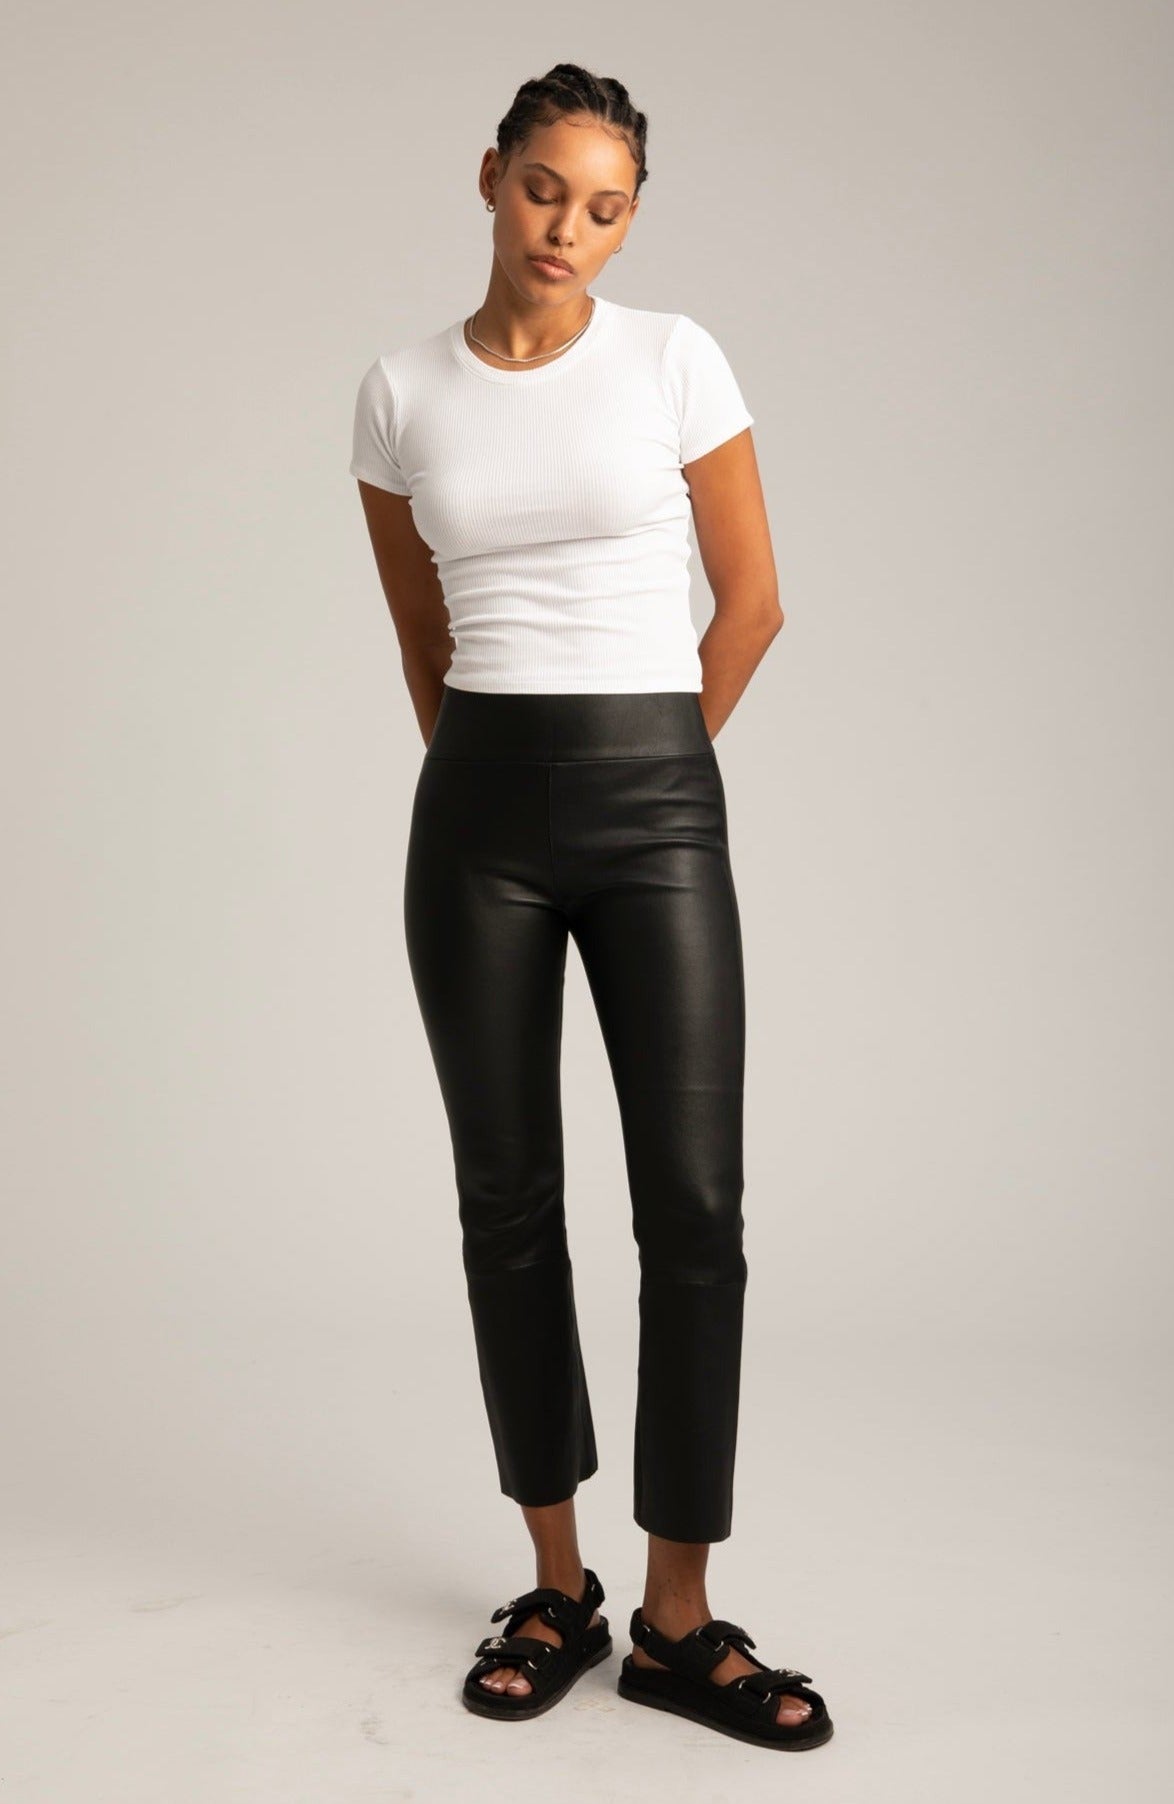 Zara 100% Real Leather Pants Leggings Sz S Au 8-10